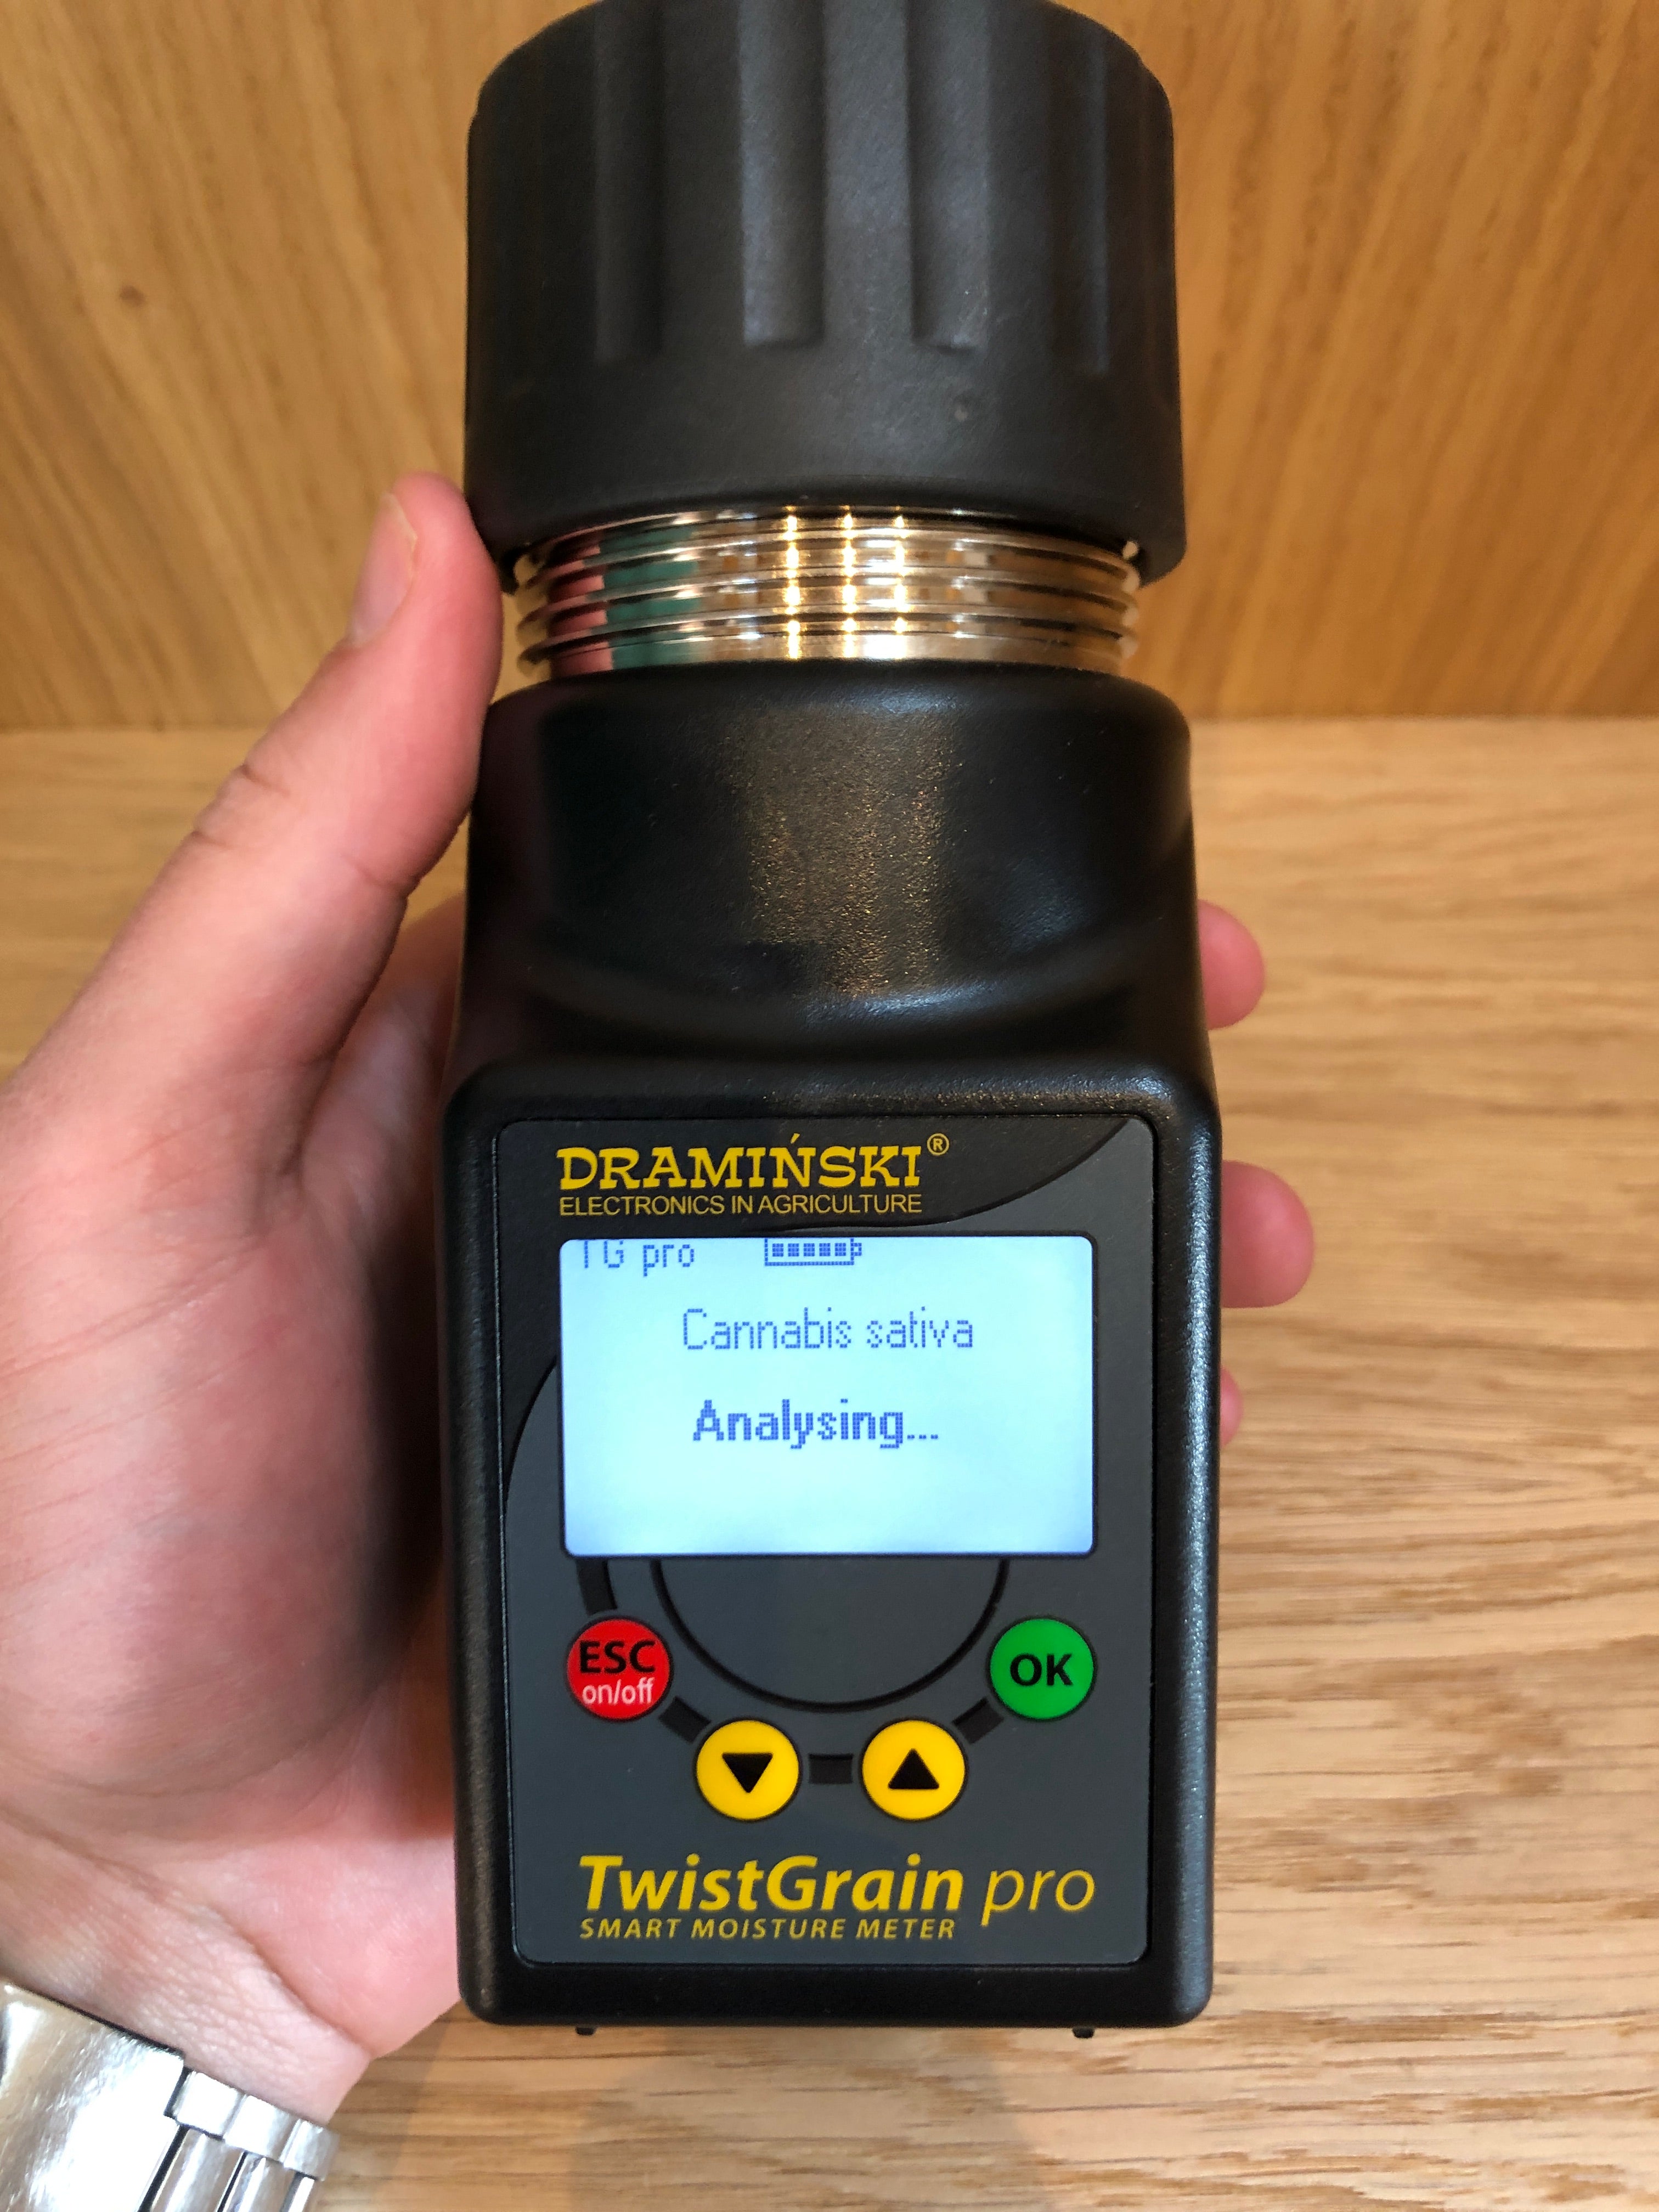 DRAMINSKI moisture meter Analysing hemp seed